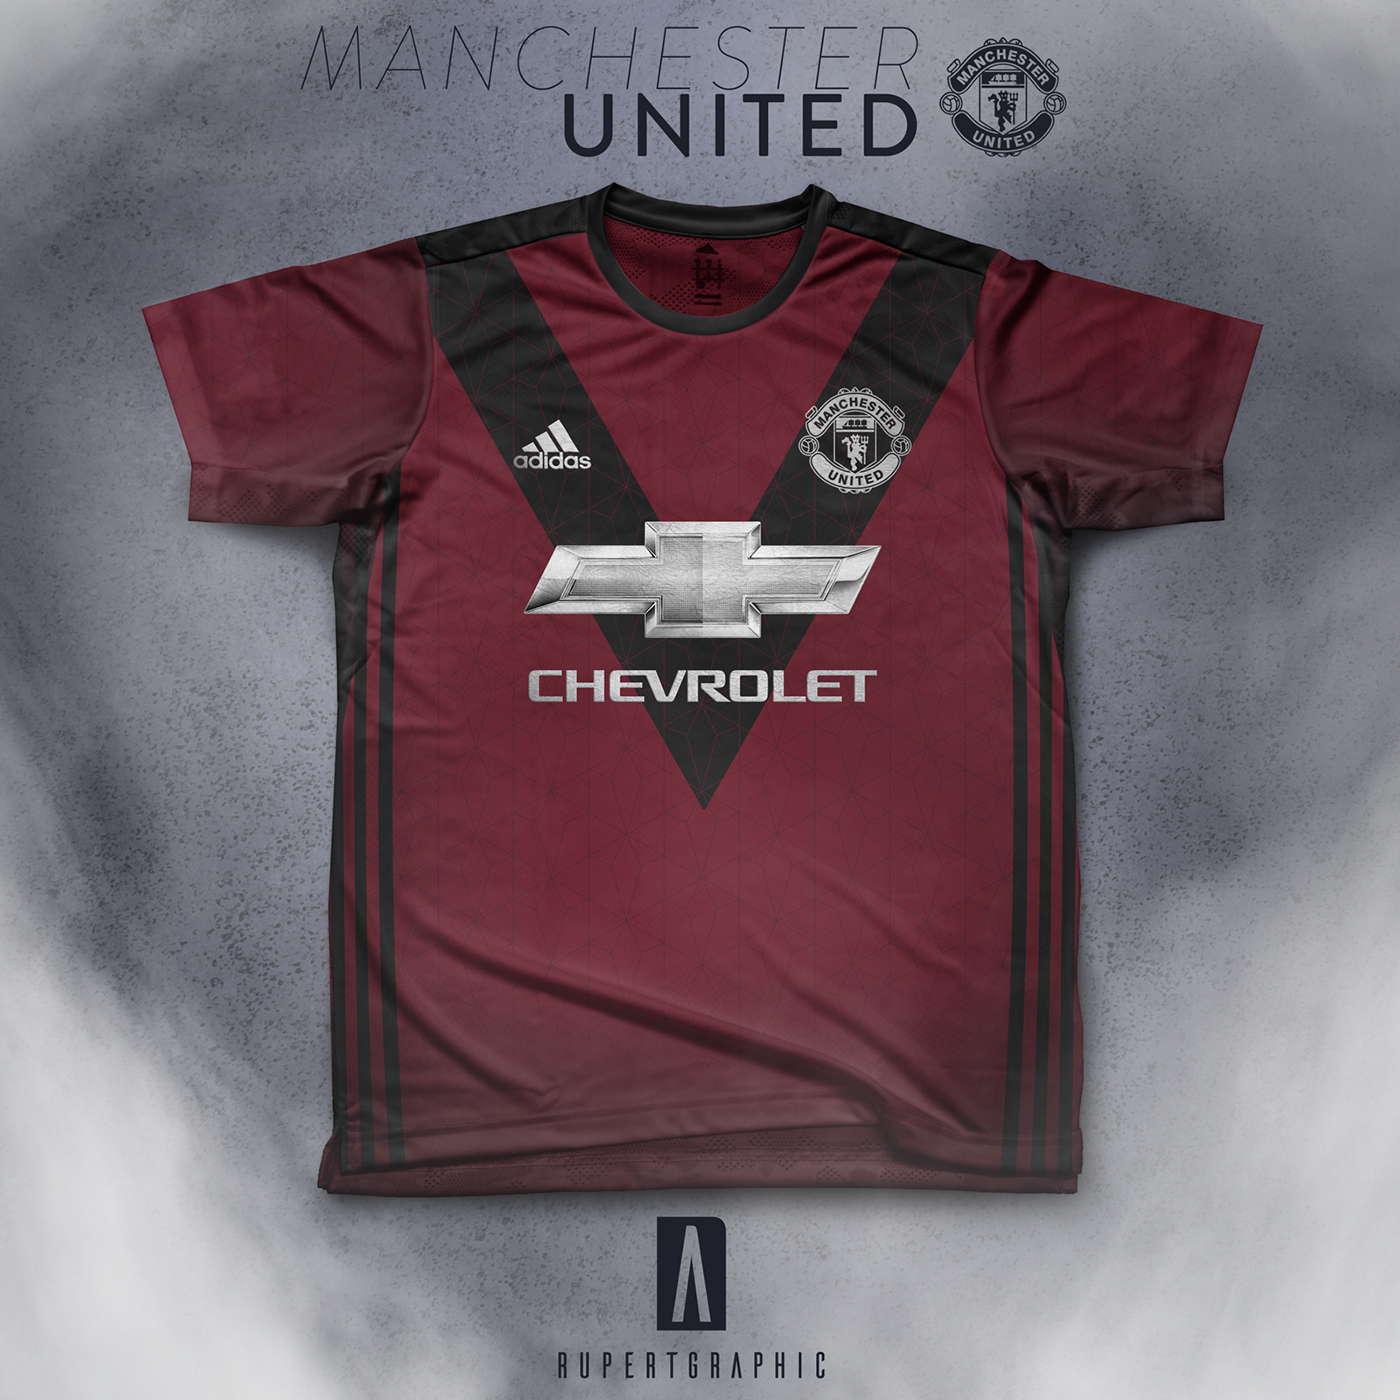 Man U manchester Manchester United red devils Premier League adidas soccer football